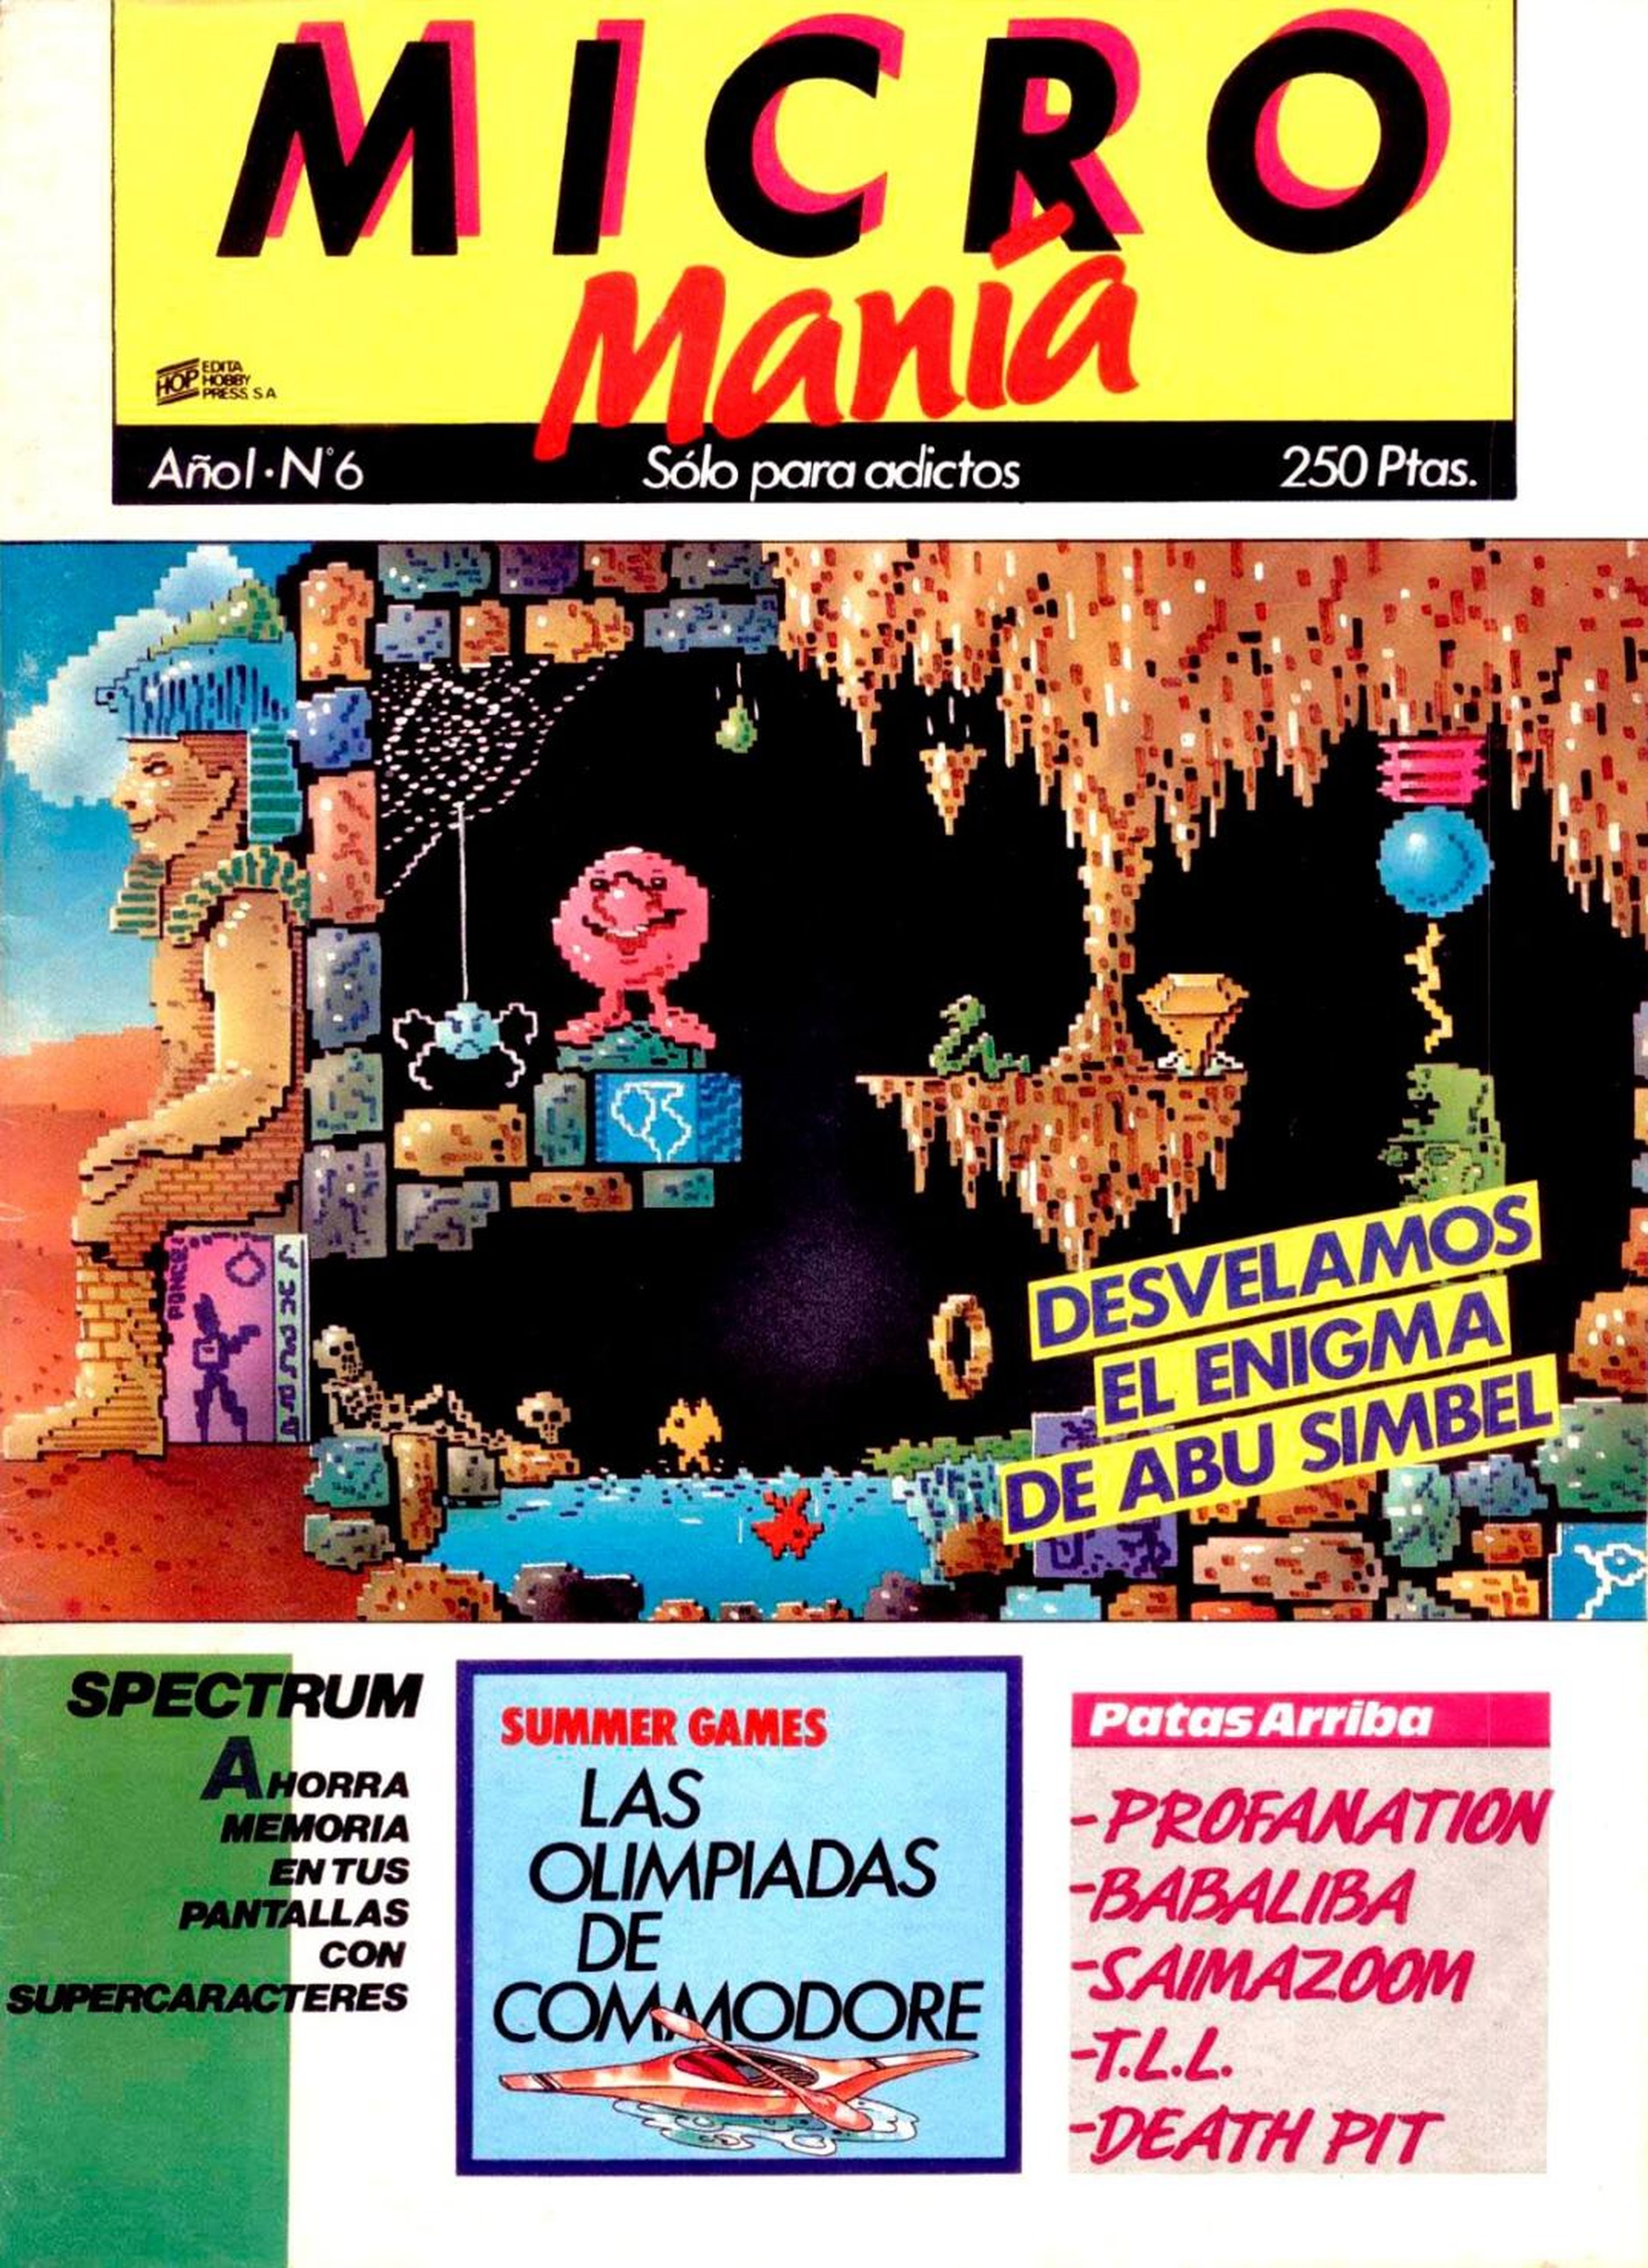 Tio Bruno ZX Spectrum micromania